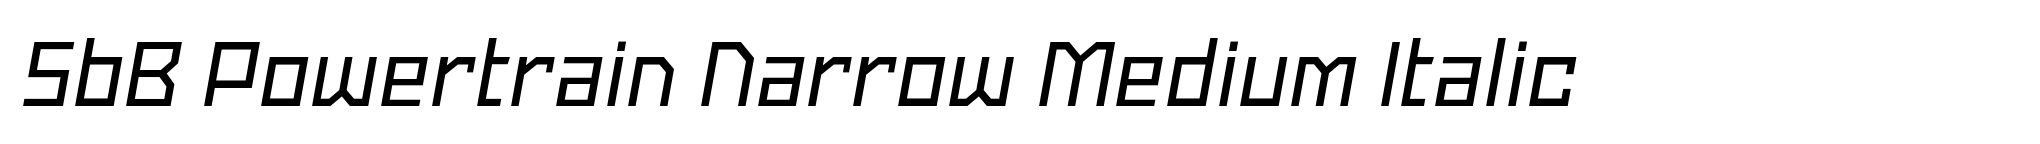 SbB Powertrain Narrow Medium Italic image